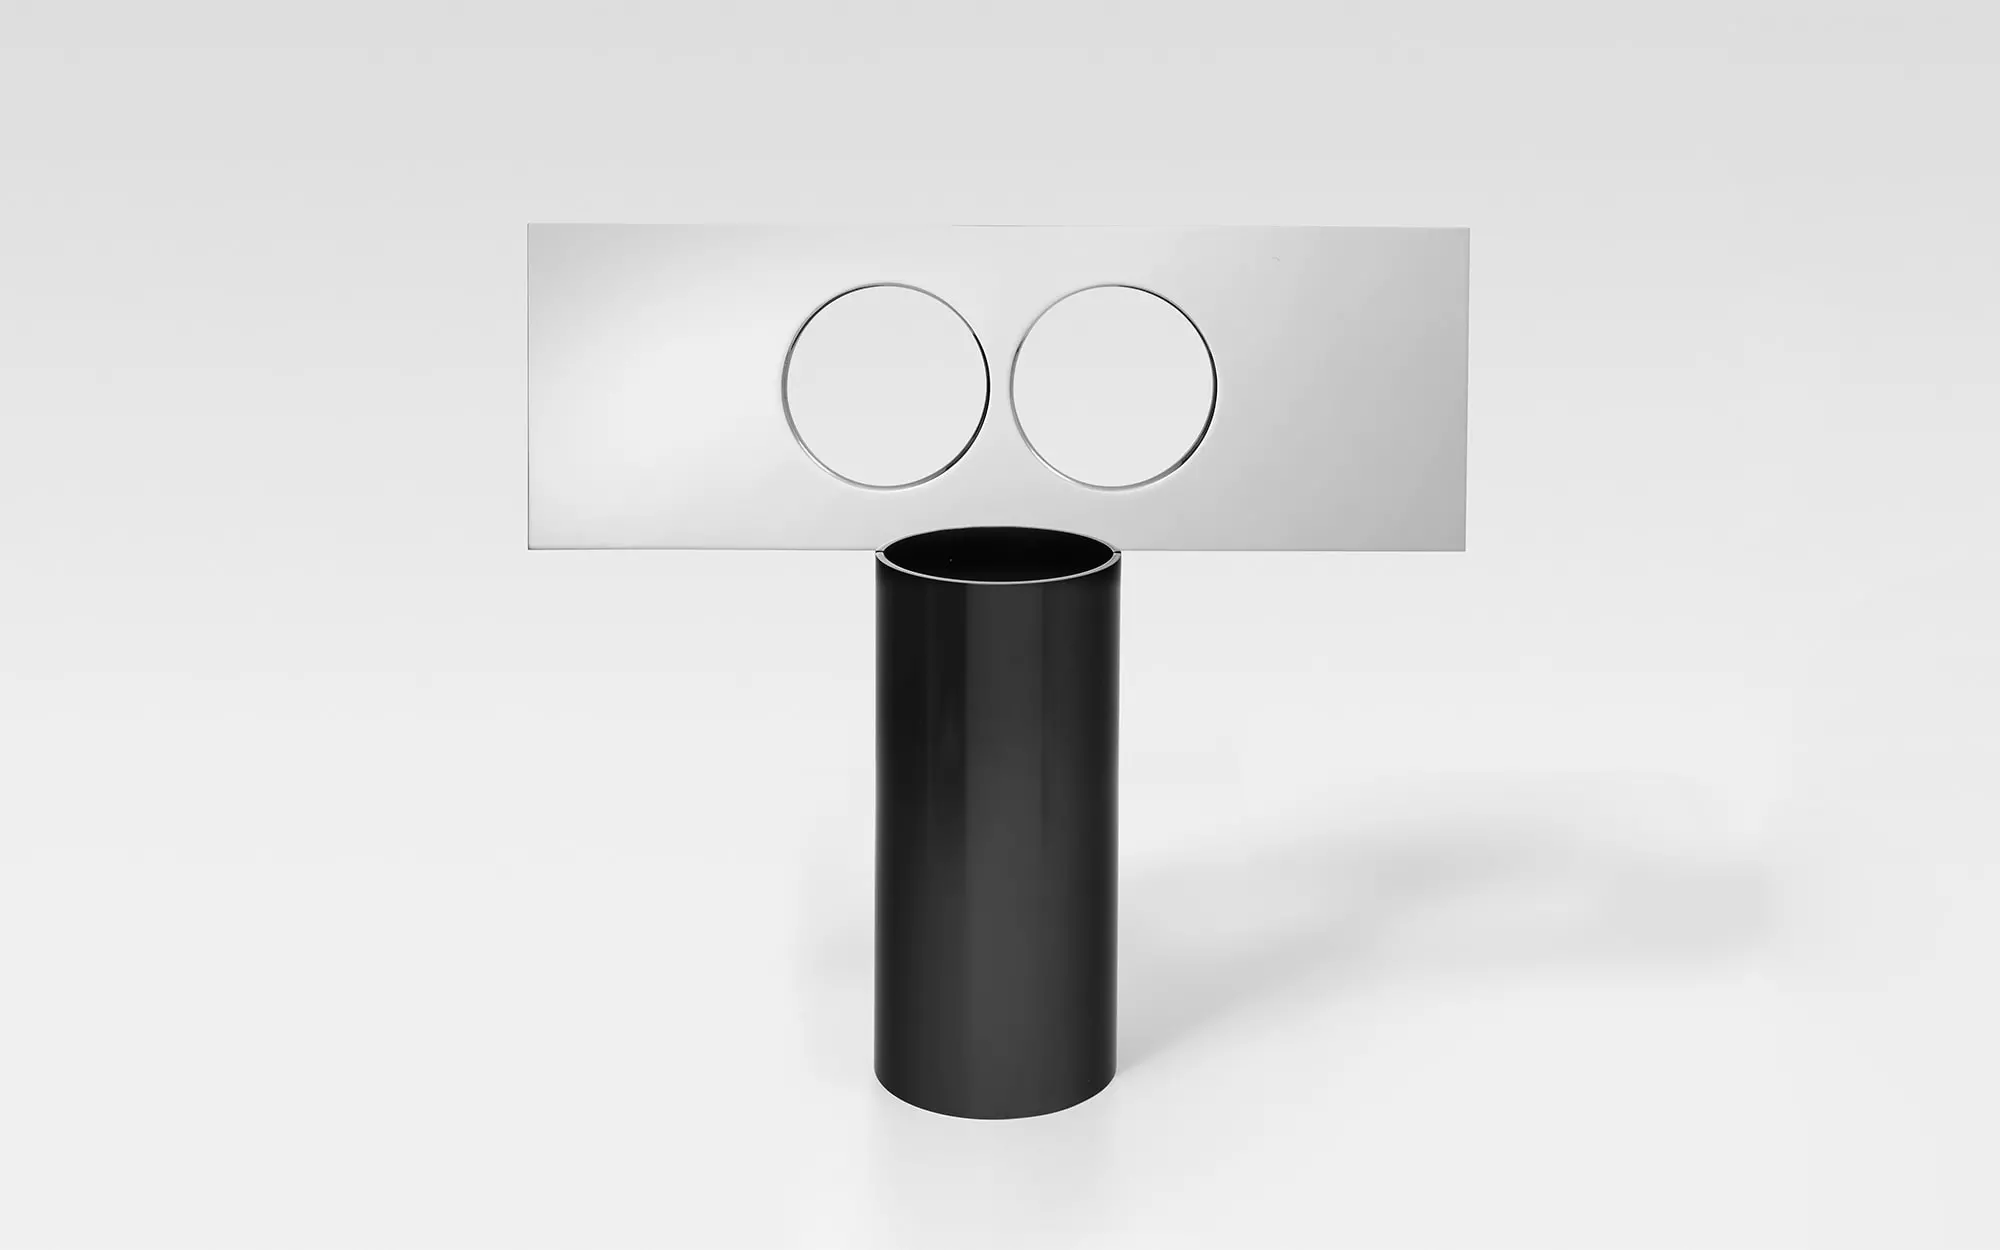 Lunettes - 2 Vase - Pierre Charpin - Desk - Galerie kreo